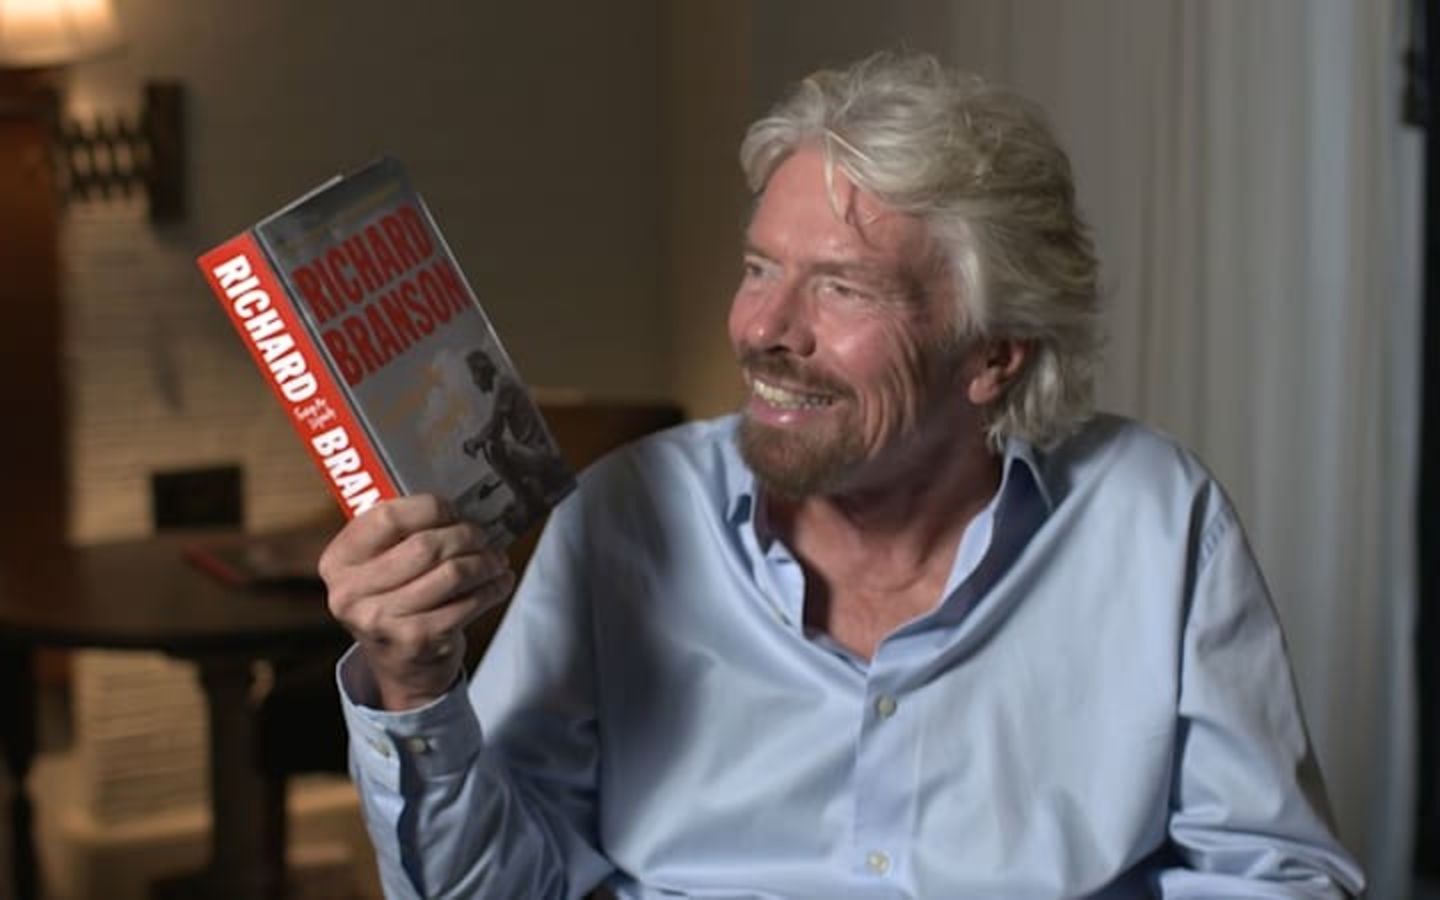 Richard Branson holding a book